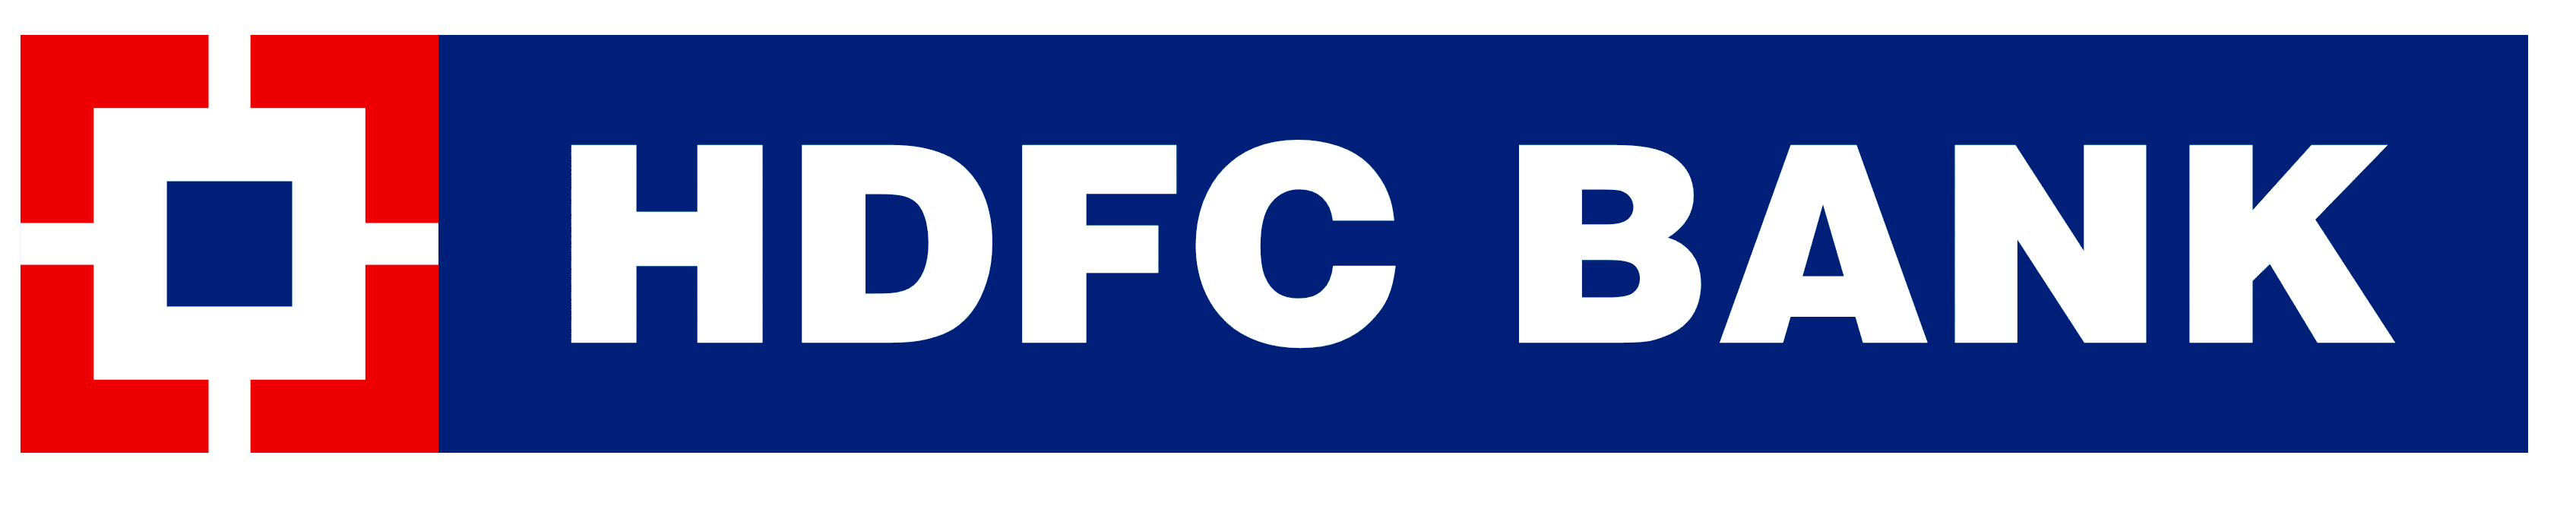 HDFC Logo - HDFC Bank – Logos Download